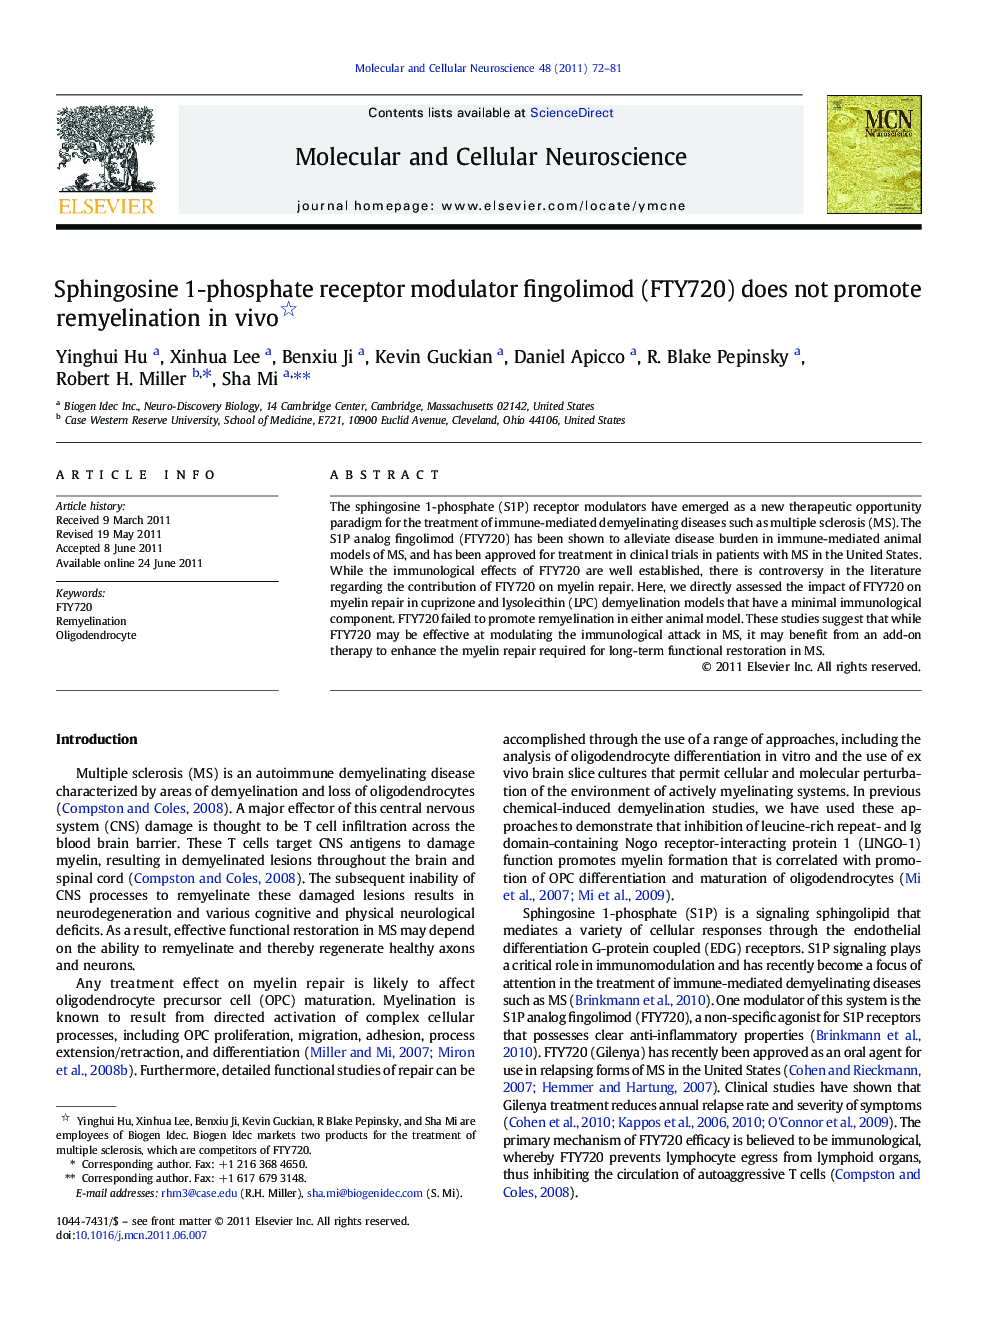 Sphingosine 1-phosphate receptor modulator fingolimod (FTY720) does not promote remyelination in vivo